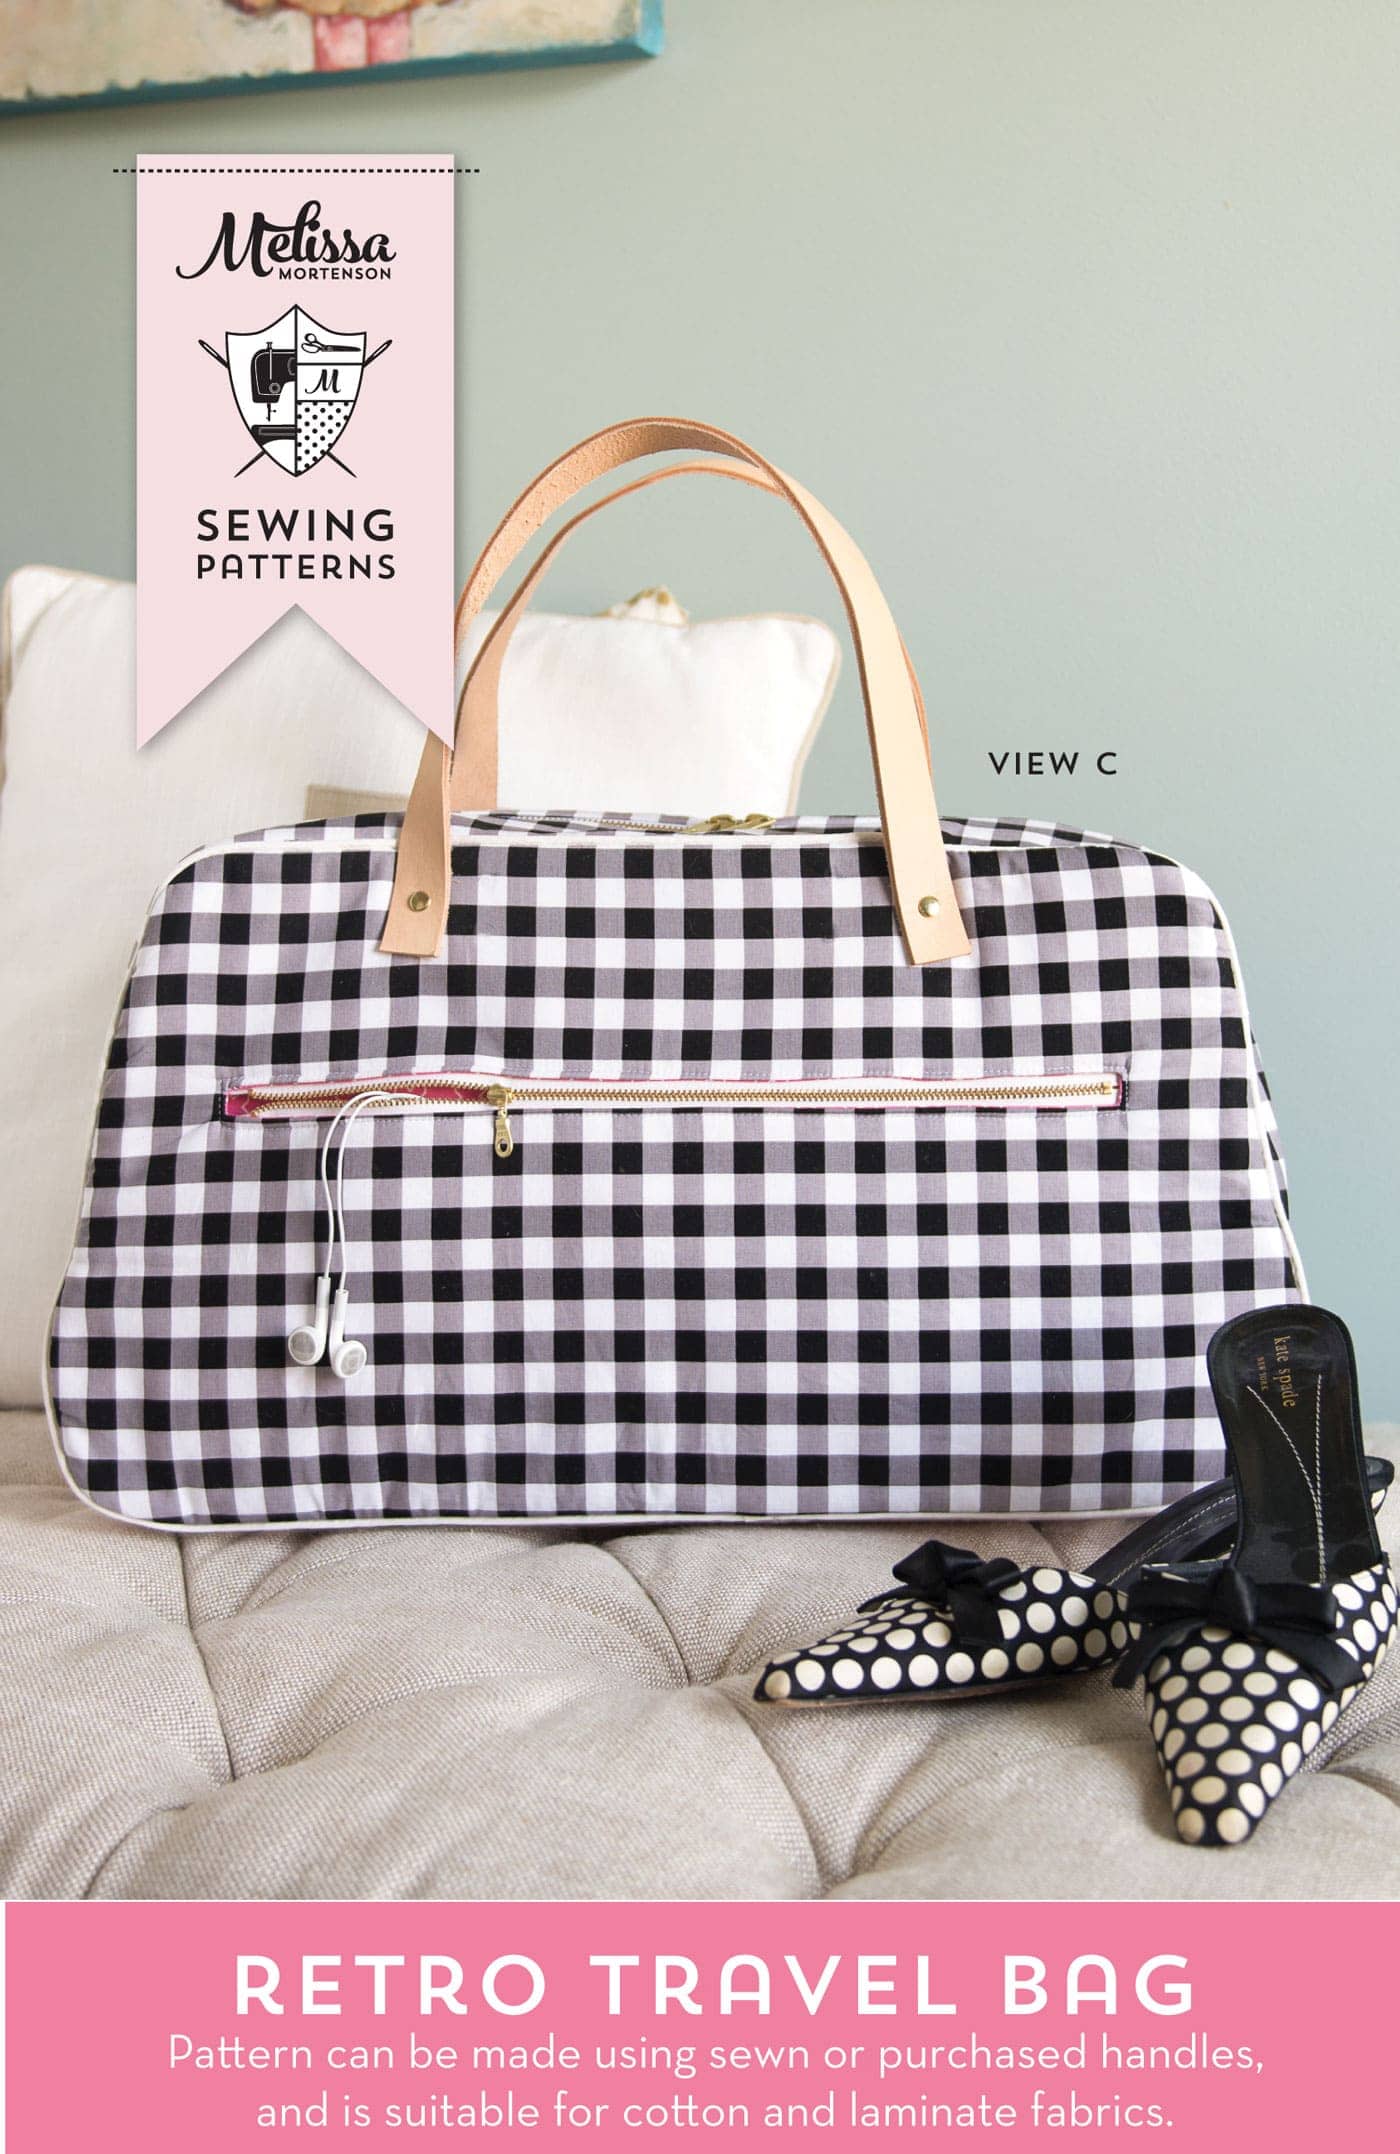 Bonhams : Pack Your Designer BagsTime to Travel in Style with Bonhams